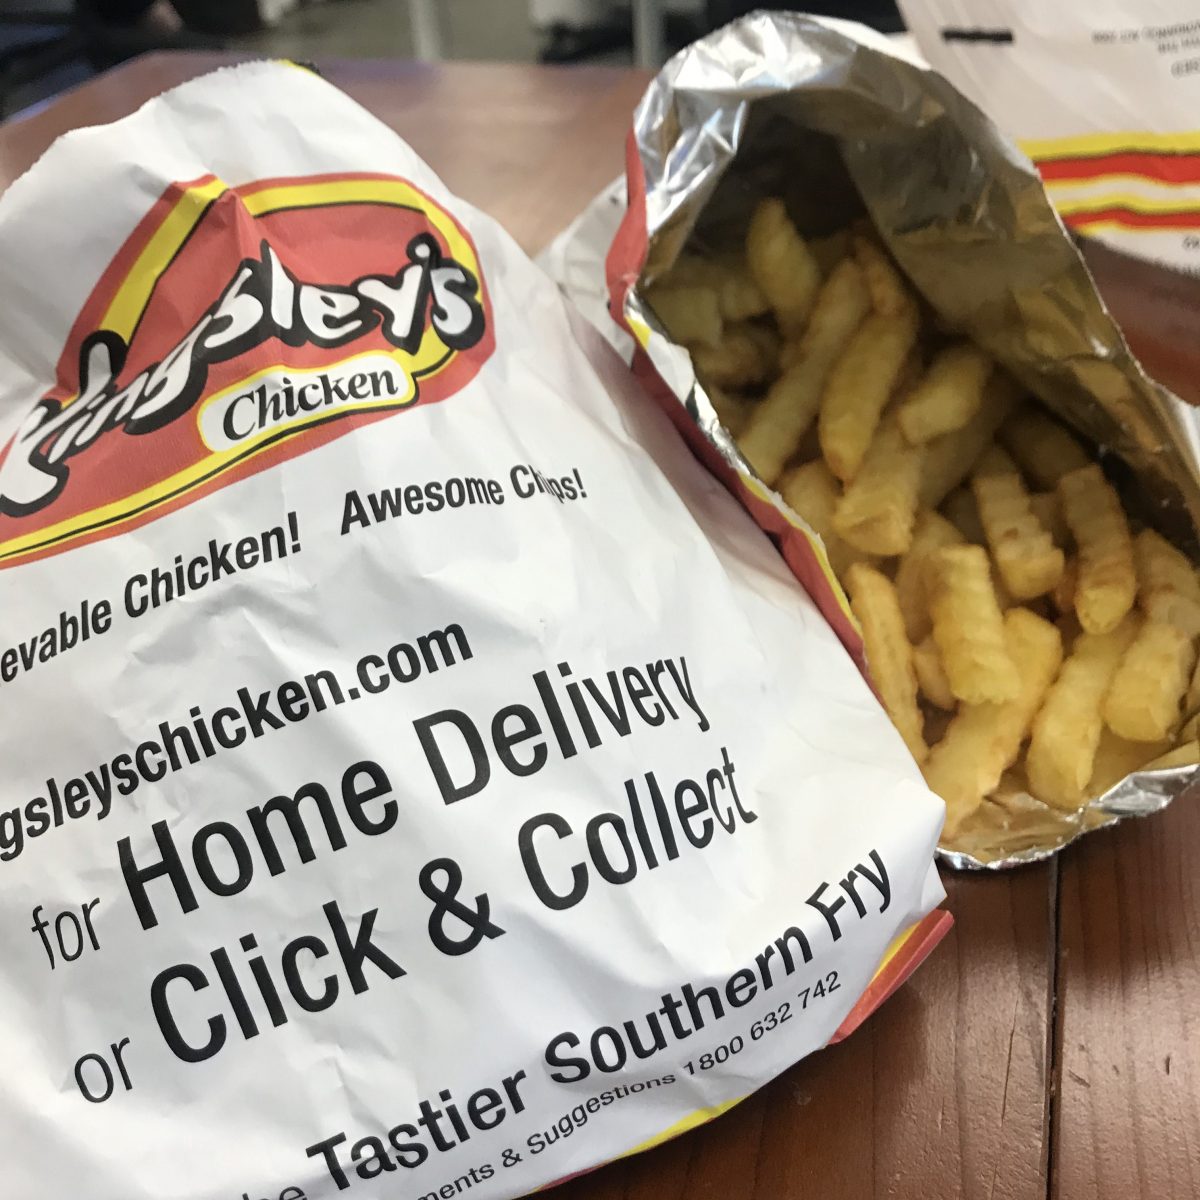 Kingsley's chips